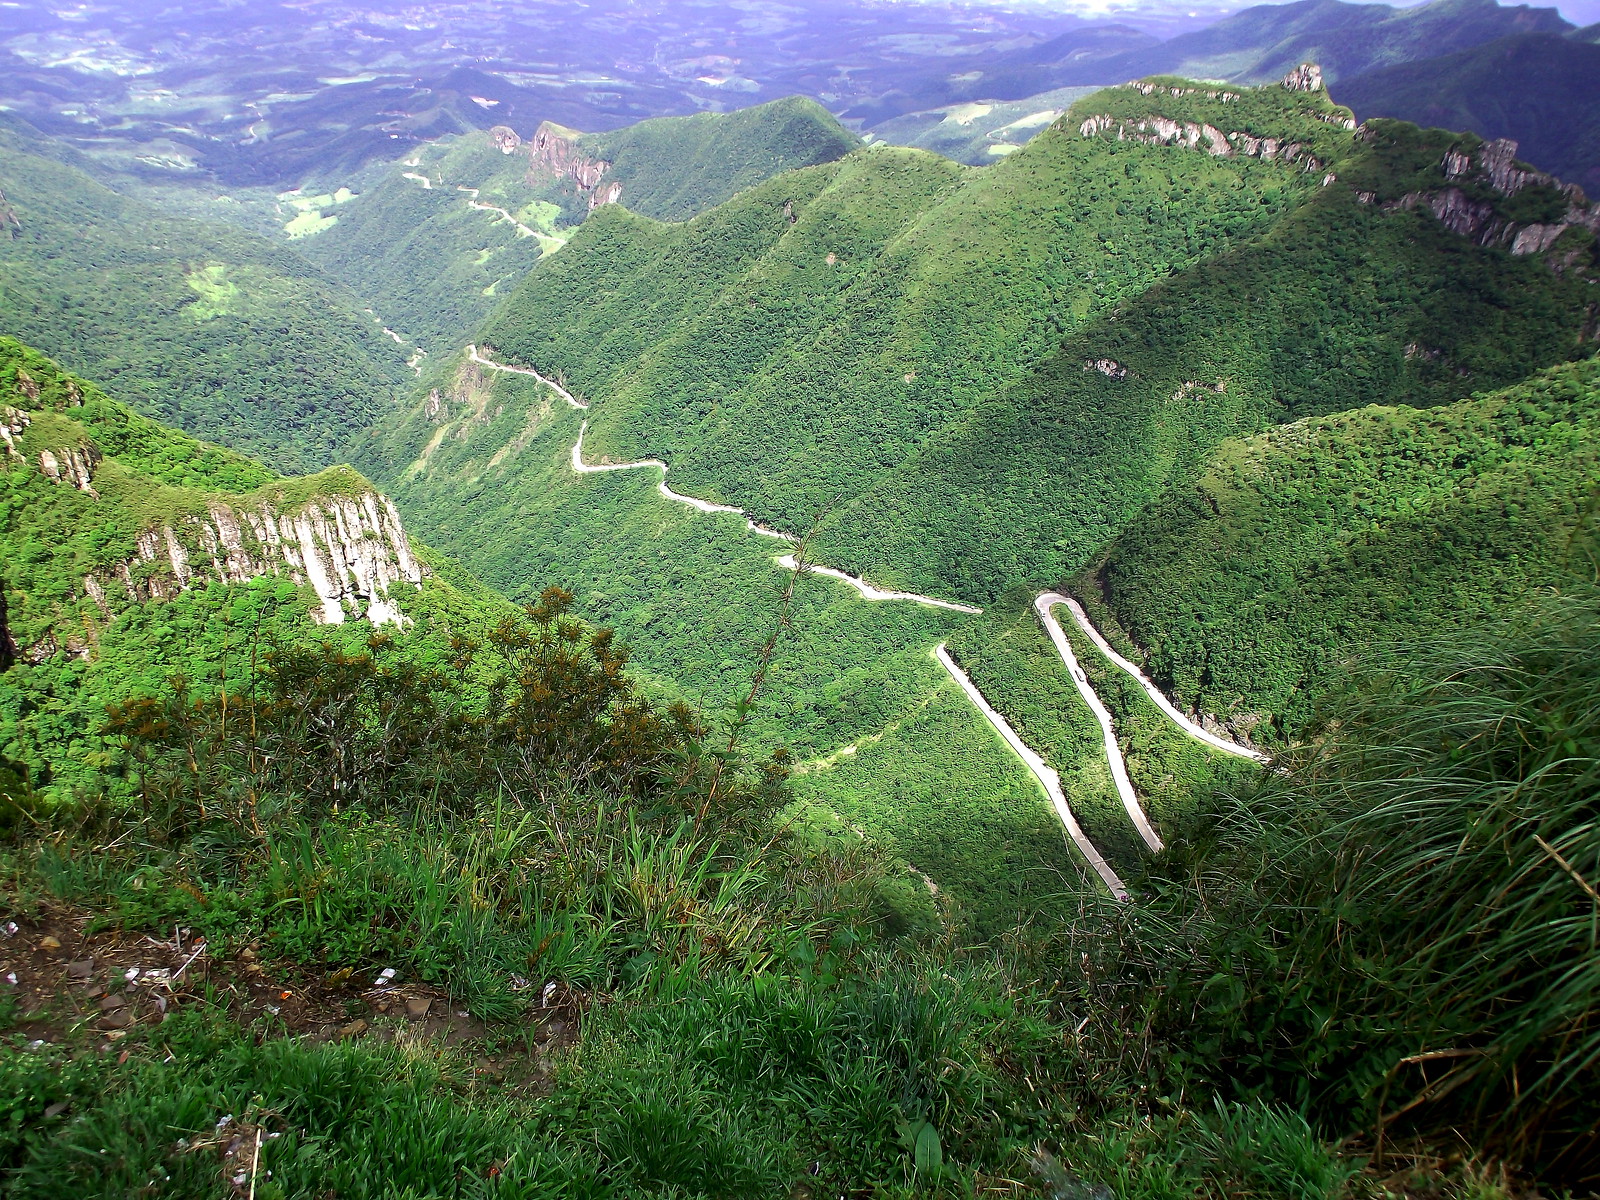 A long, winding road cuts through verdant, mountainous forest.